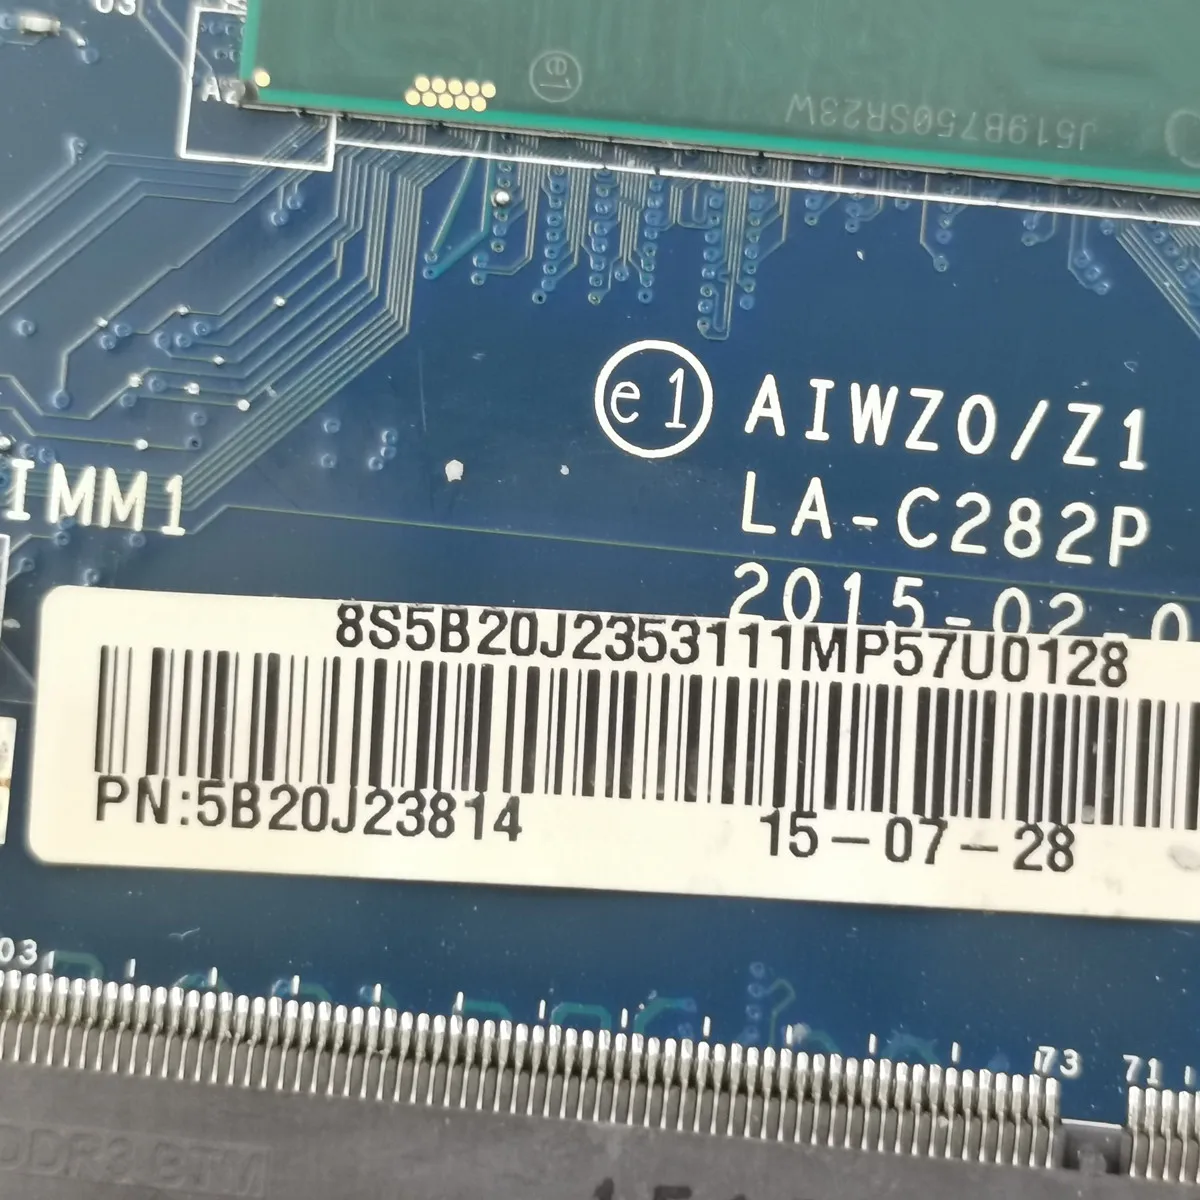 

For LENOVO Ideapad Z51-70 i7-5500U Laptop motherboard 5B20J23649 LA-C282P SR23W 216-0866000 DDR3 Mainboard